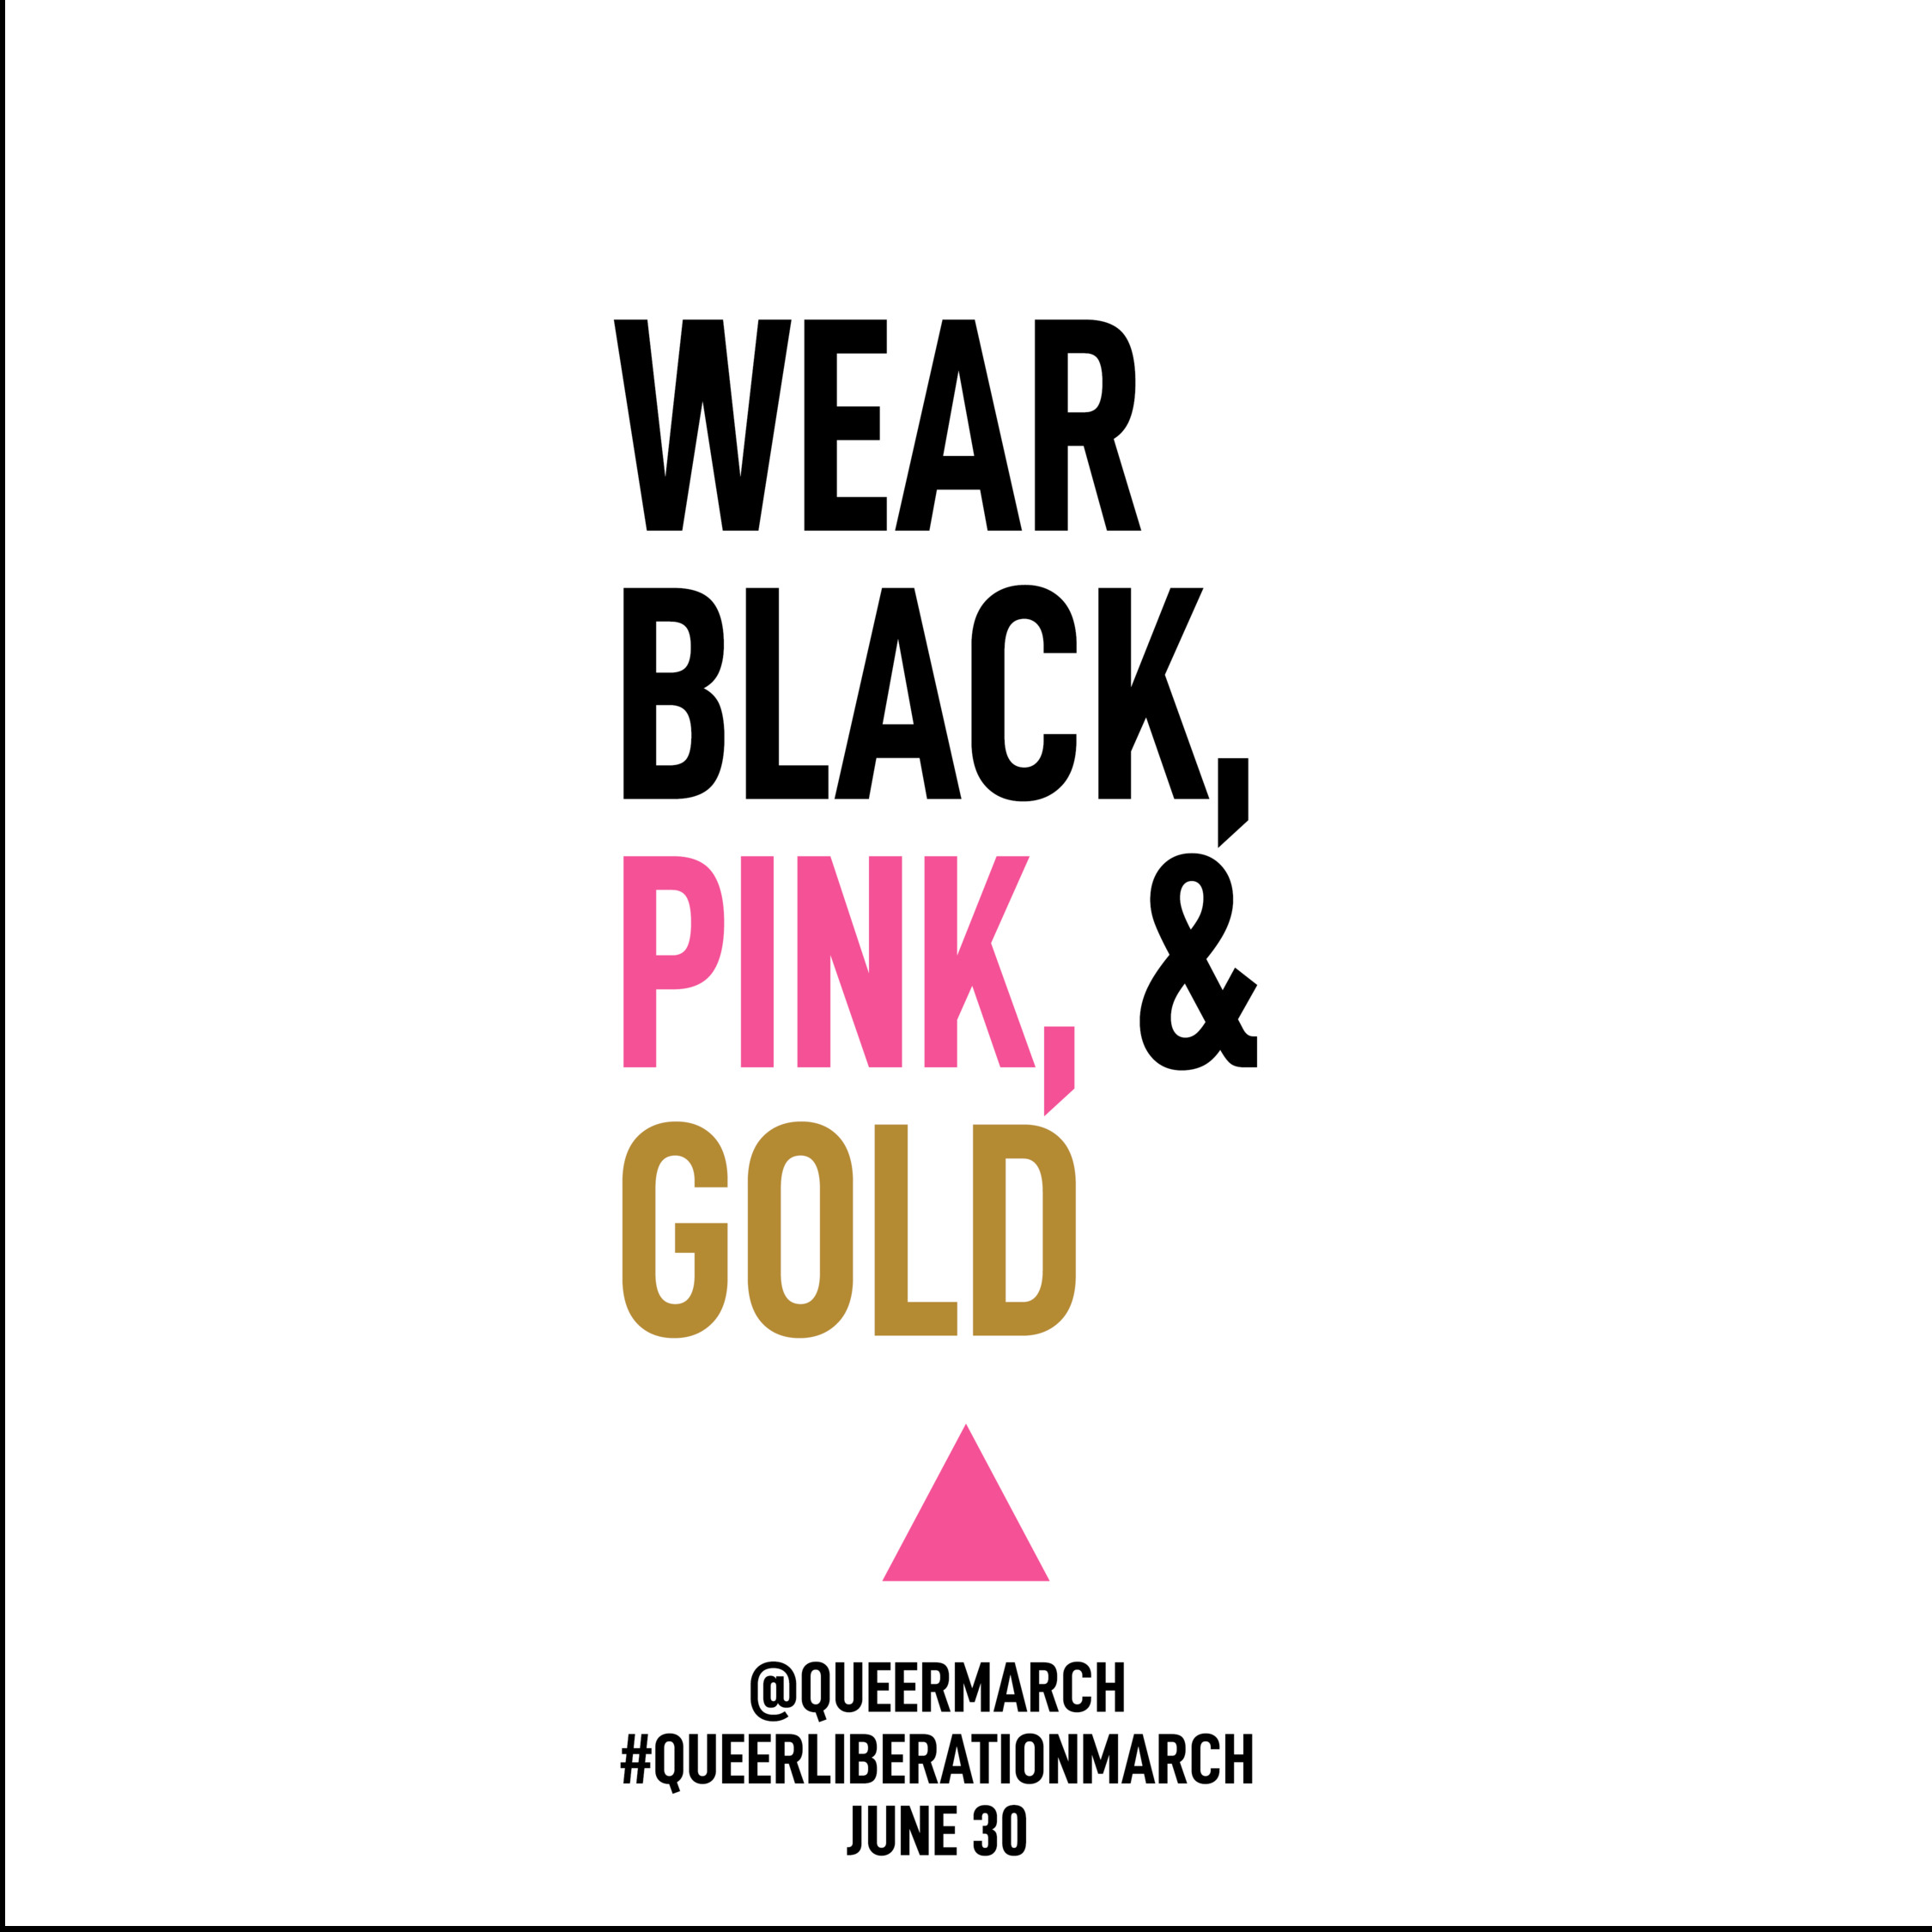 [RPC] Wear Black Pink and Gold (2 of 2) RevB1.jpg